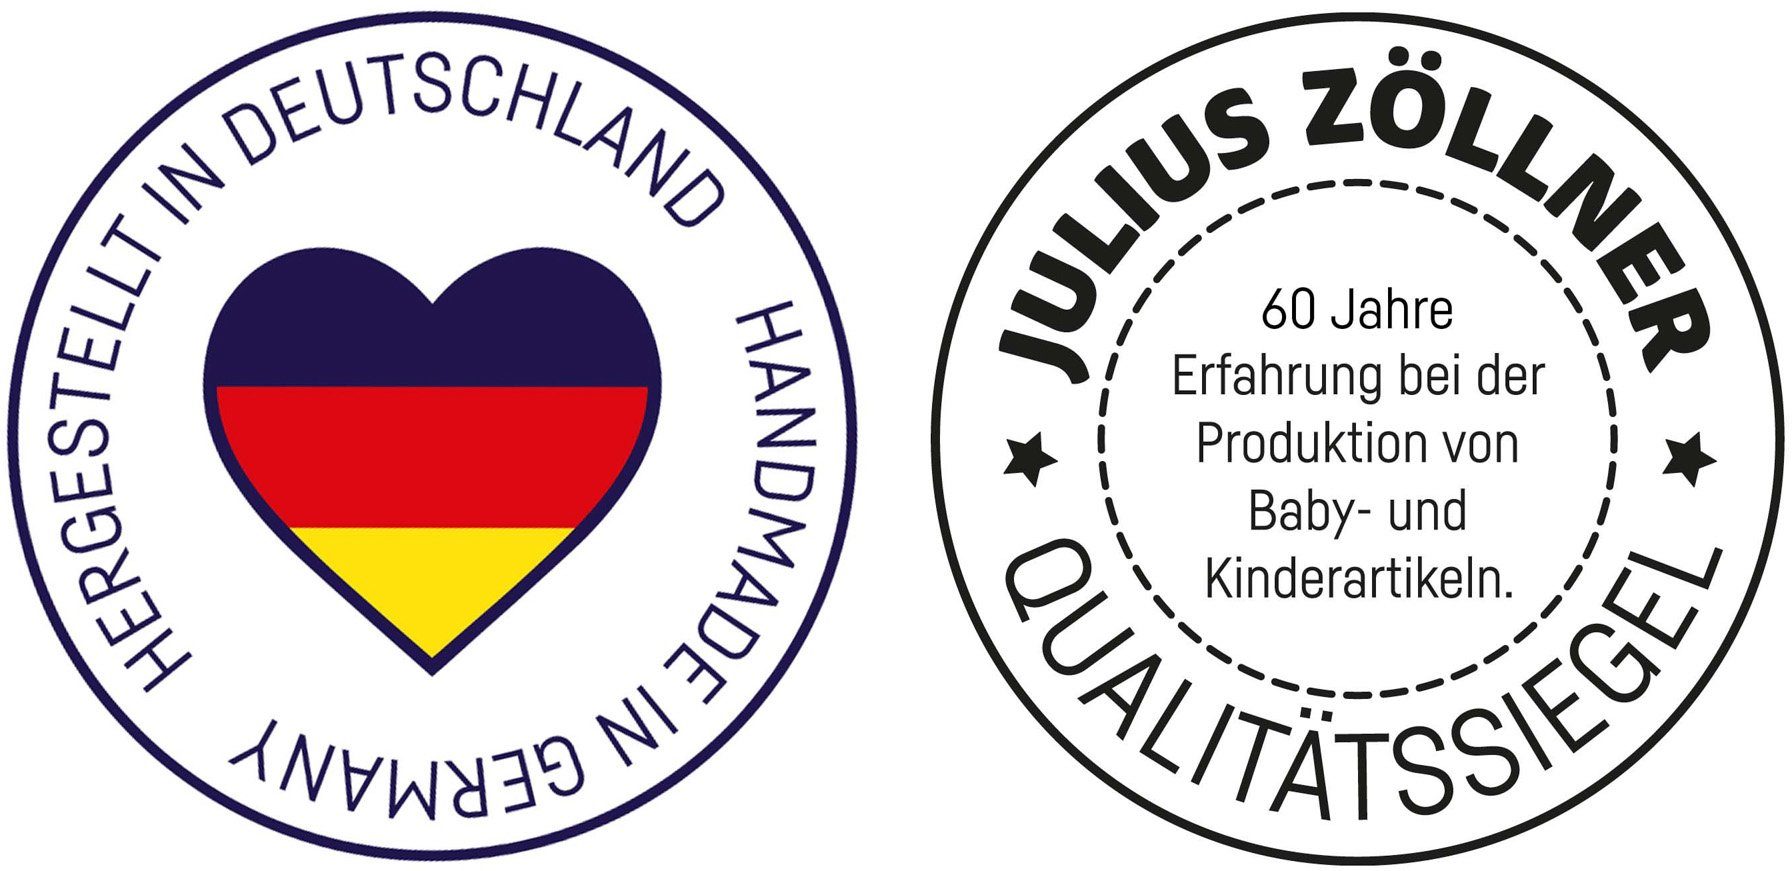 Krabbeldecke Organic, Zöllner, Made Germany in Julius Bogen